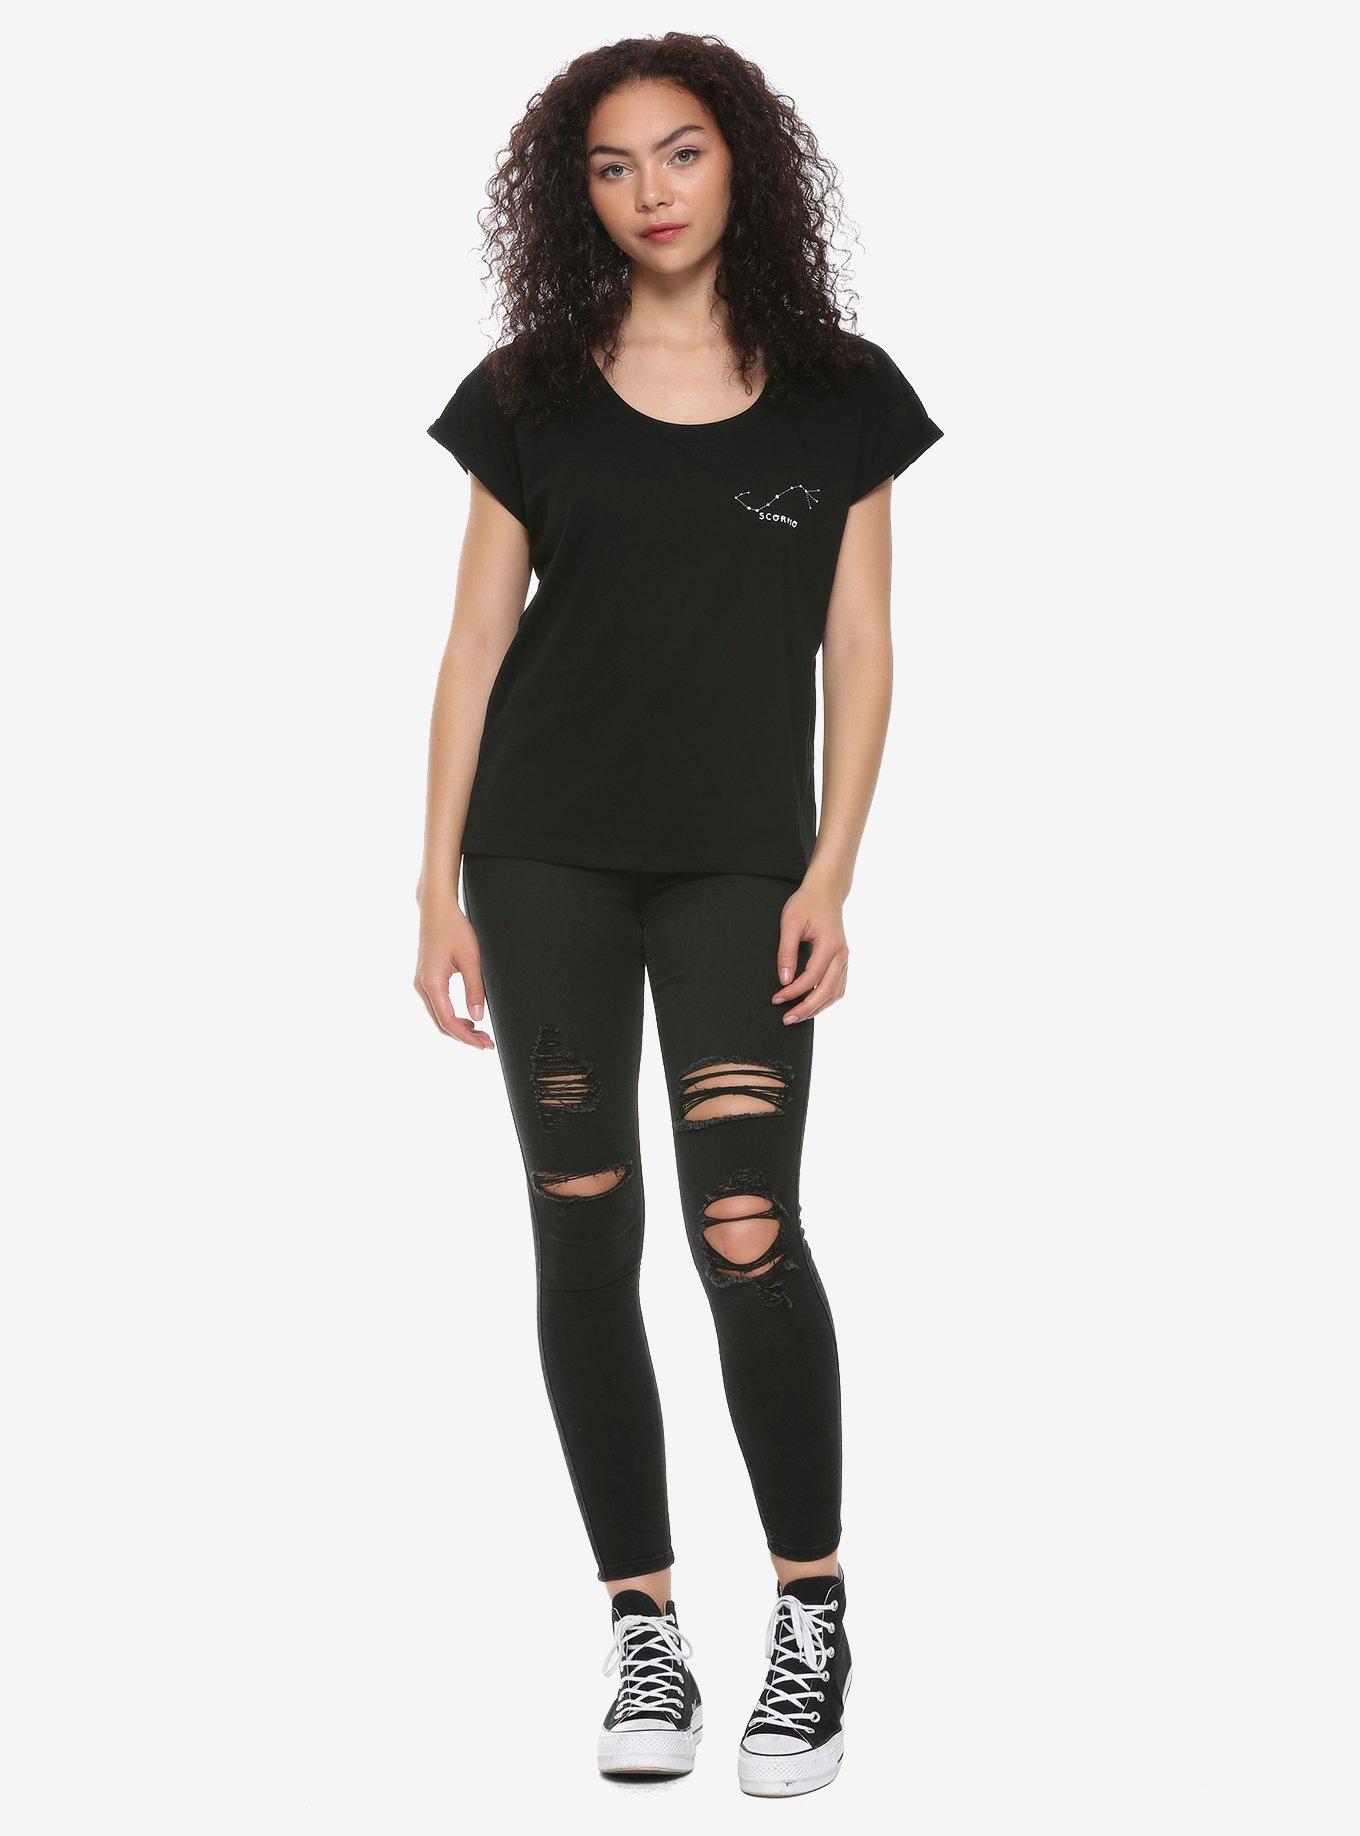 Scorpio Zodiac Girls T-Shirt, BLACK, alternate